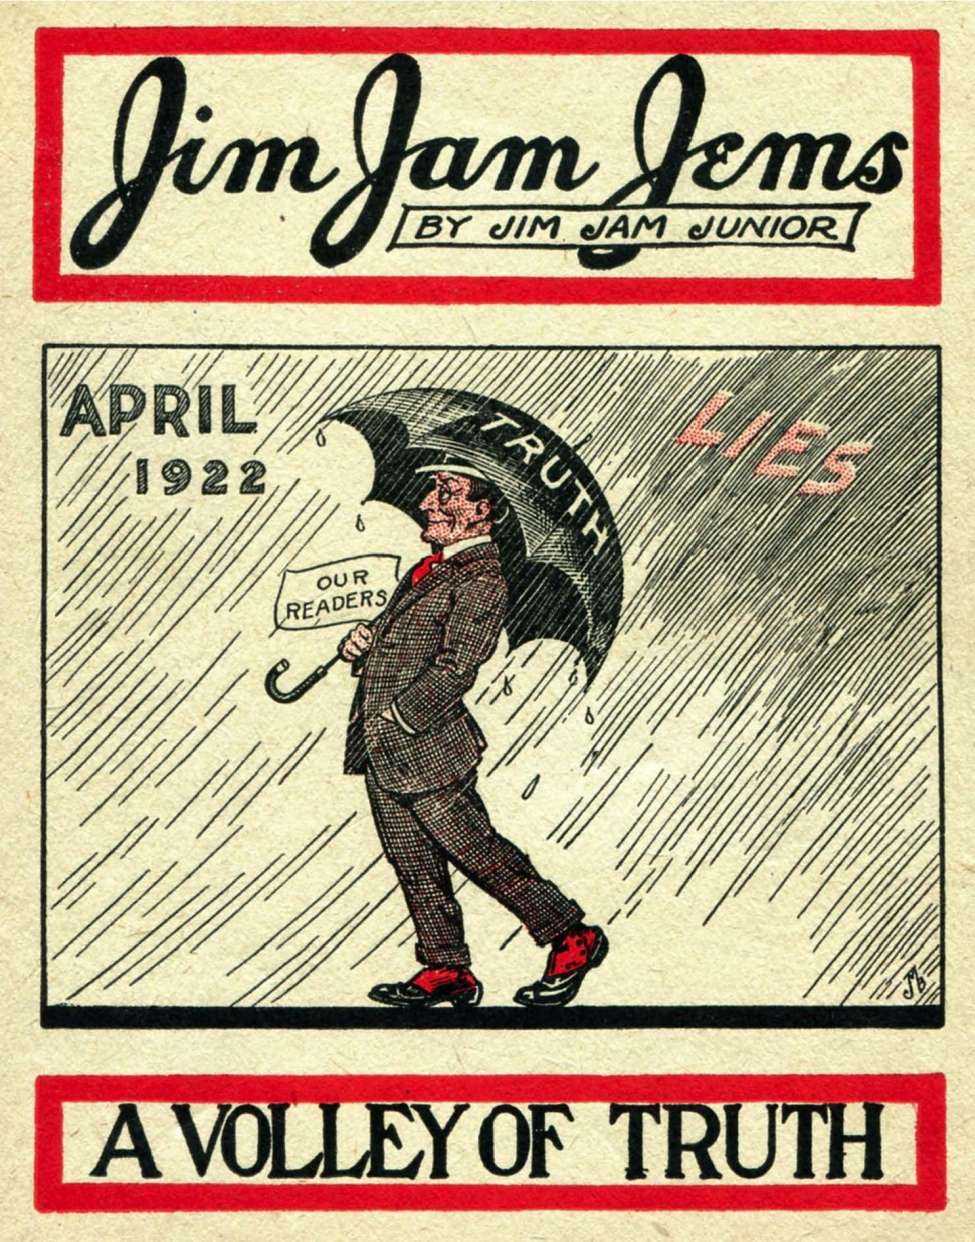 Comic Book Cover For Jim Jam Jems (1922-04)